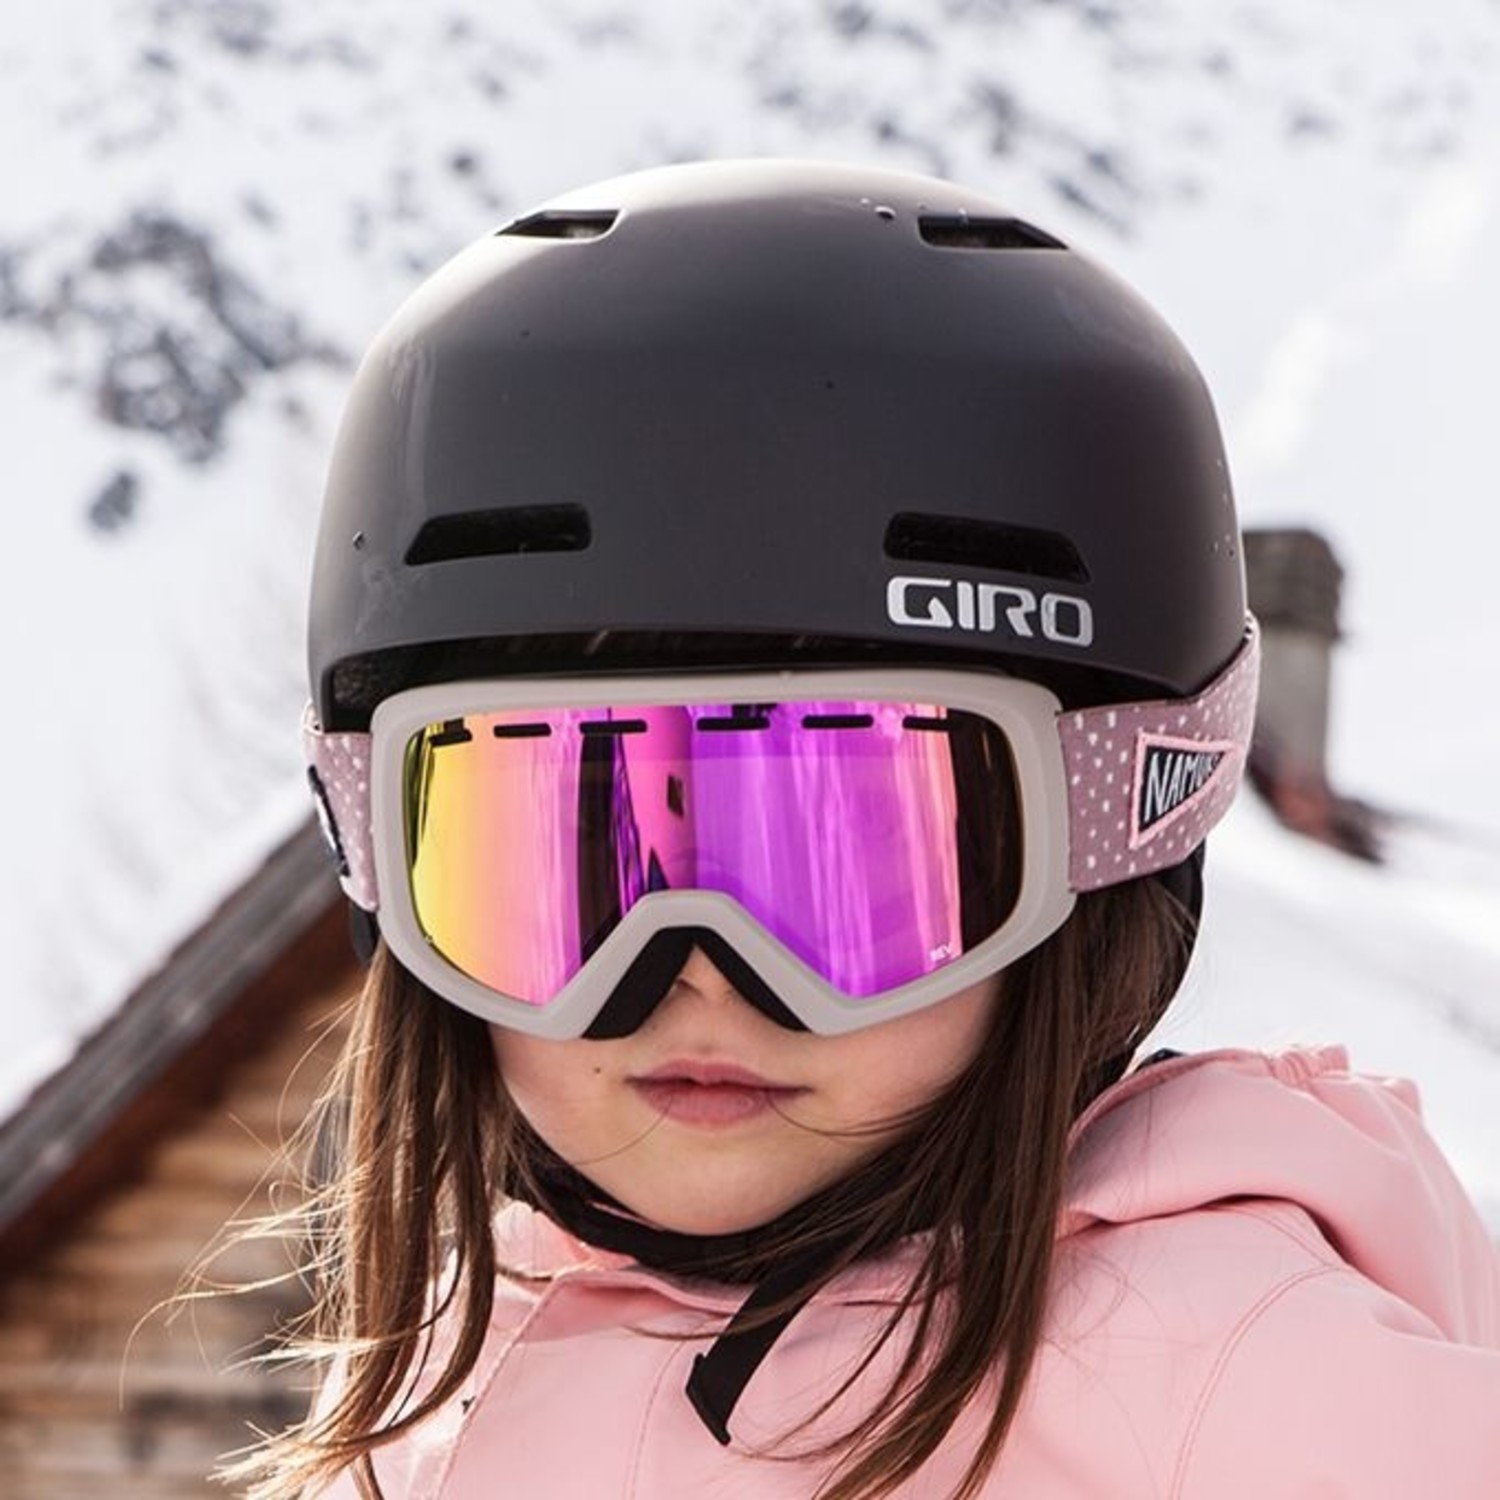 giro youth ski helmet